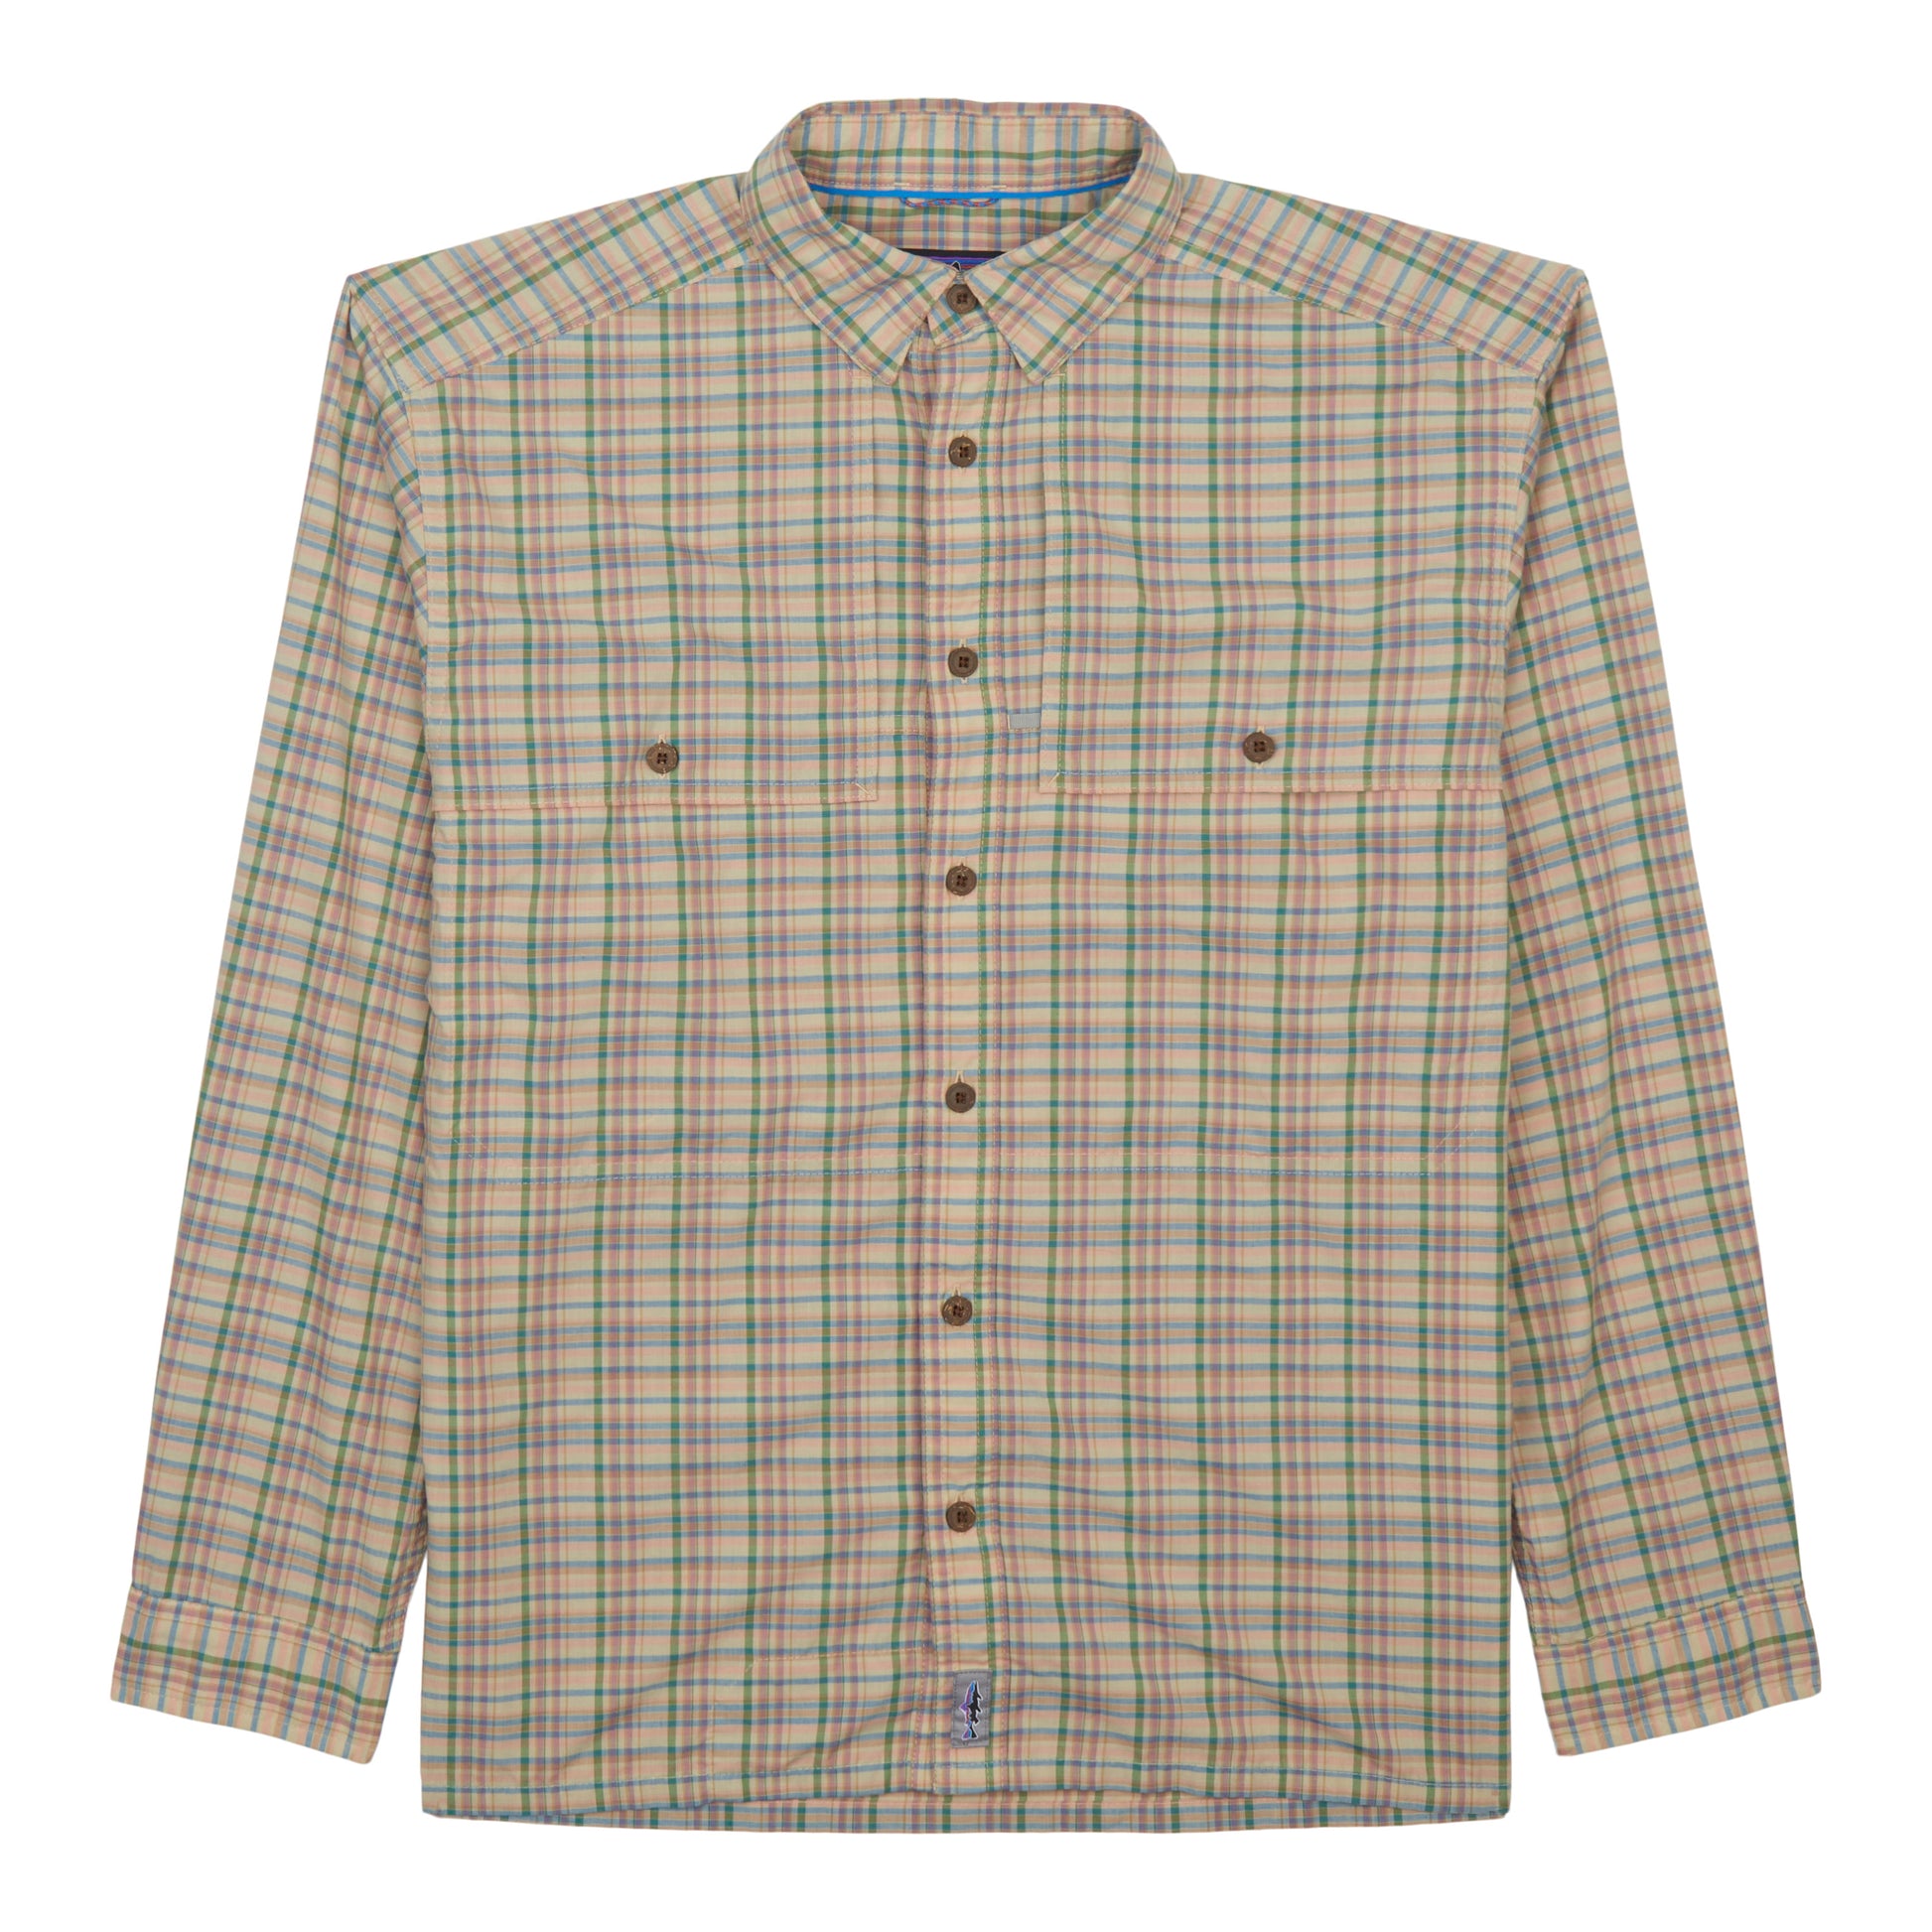 Men's Long-Sleeved Island Hopper Shirt